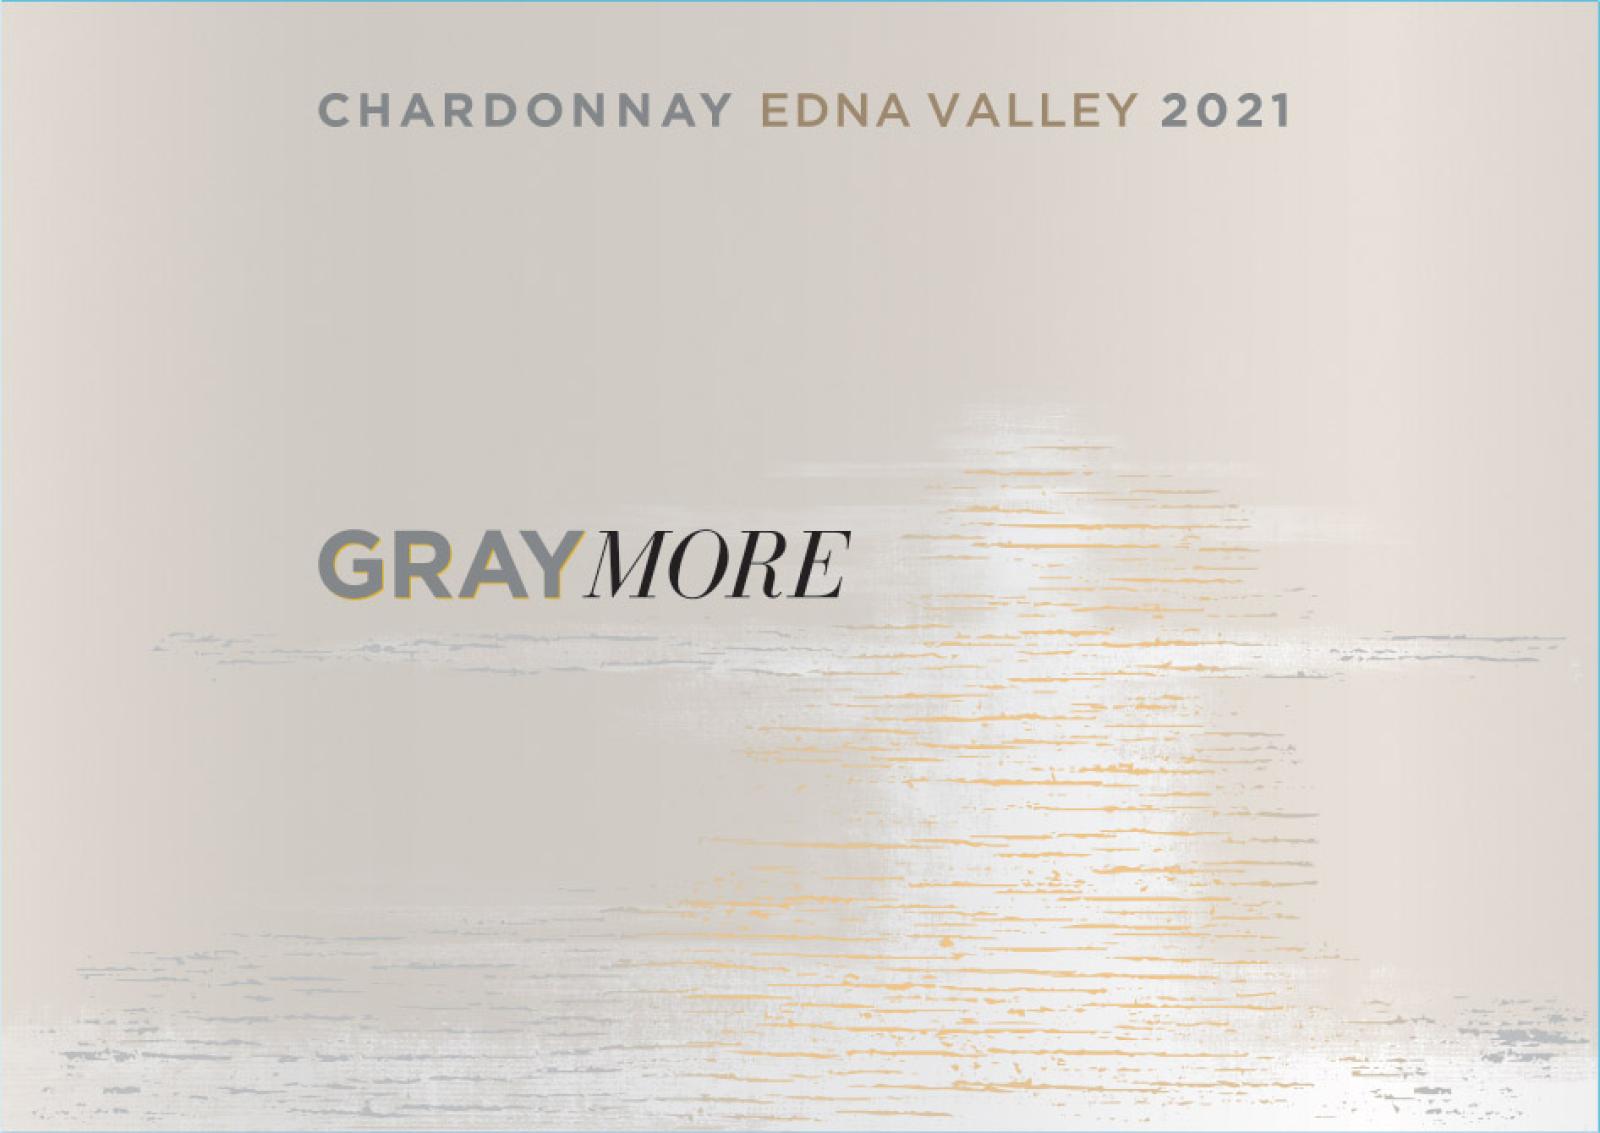 Graymore Chardonnay 2021